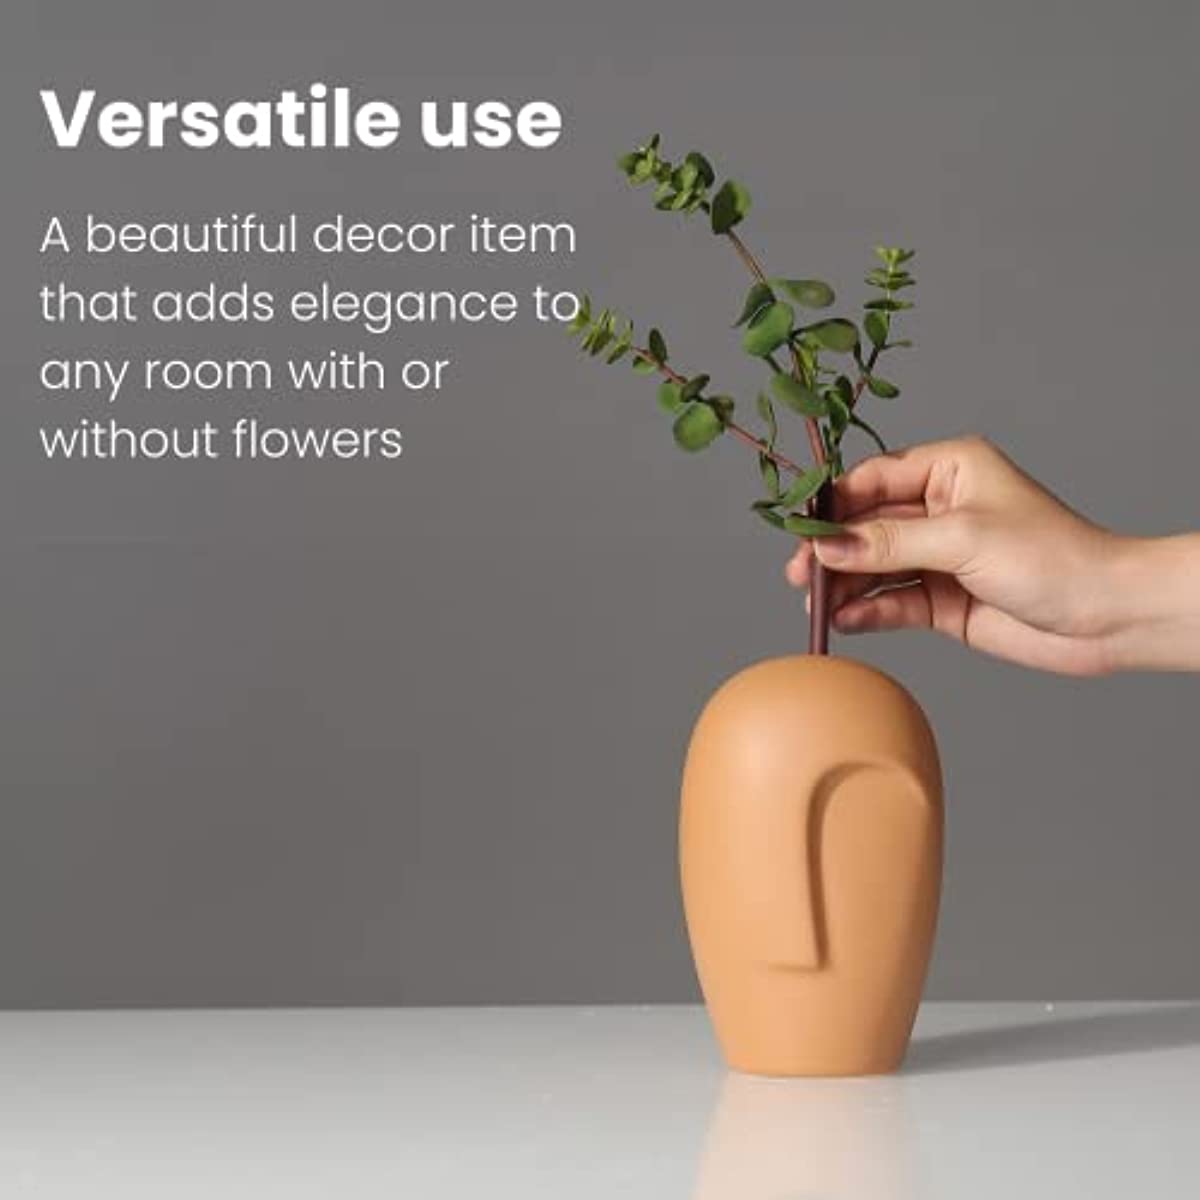 MIAJO Colorful Decor Face Vase 6.4", Funky Room Decor Aesthetic Brown